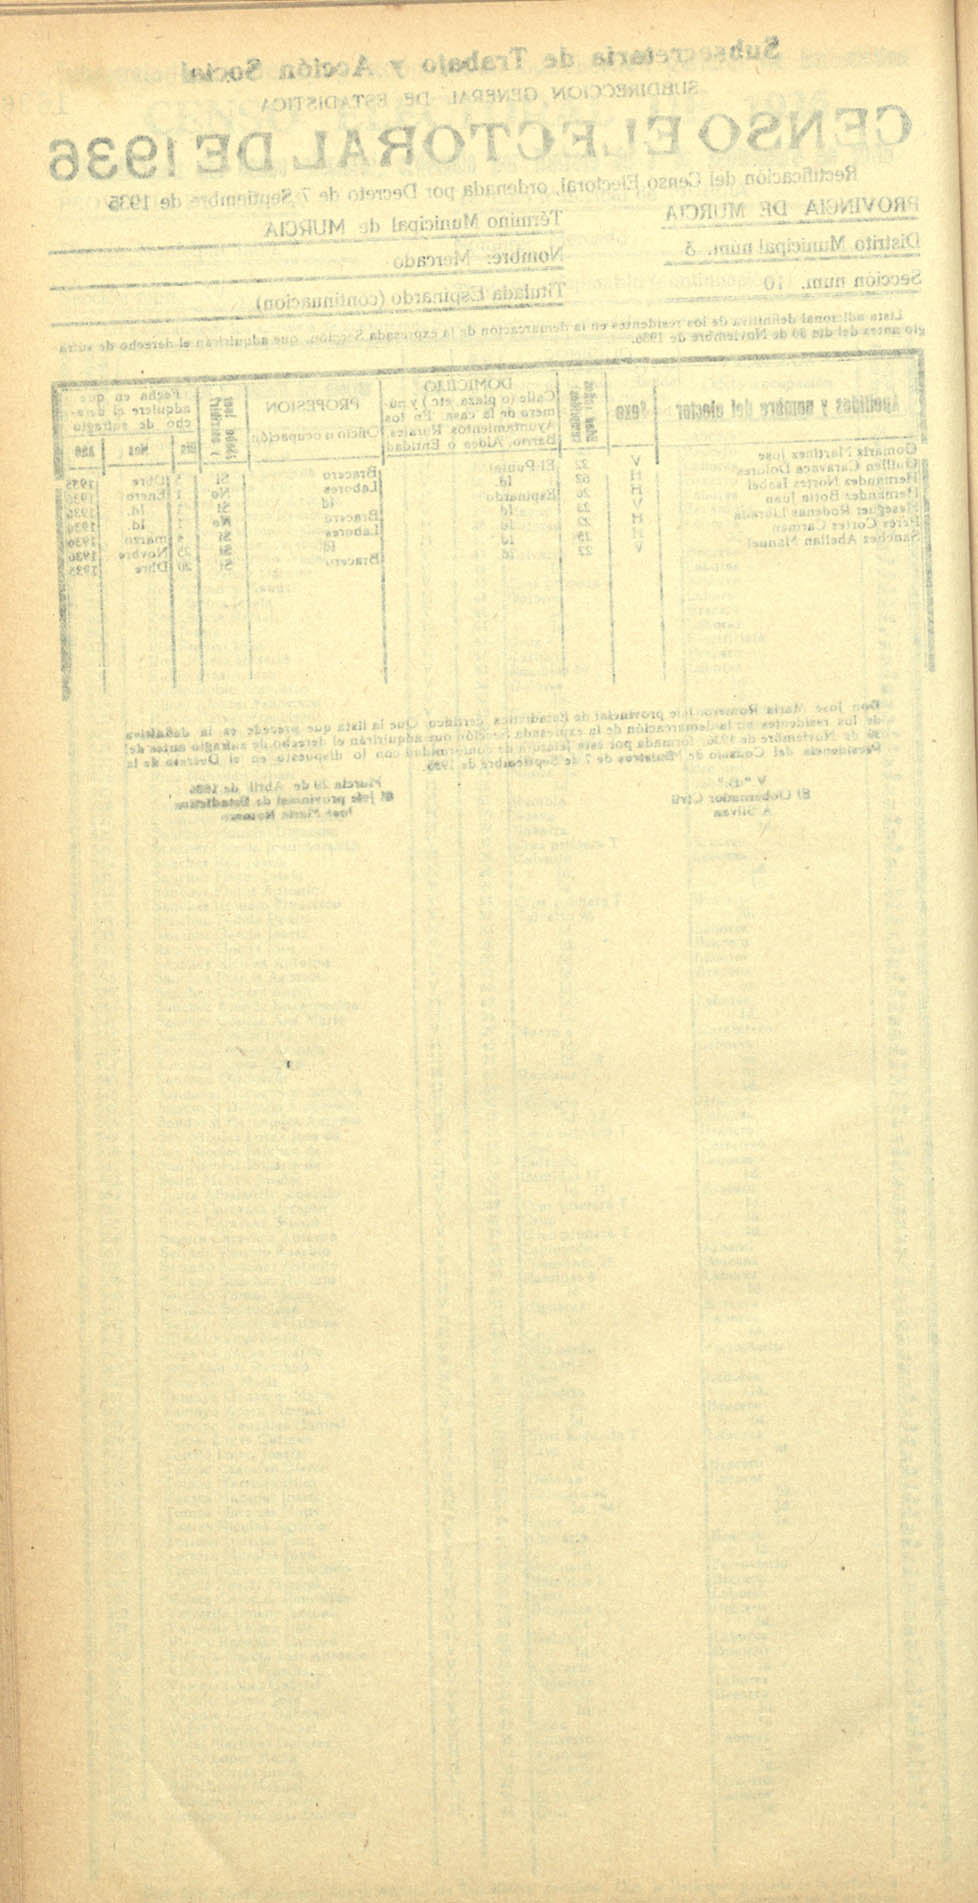 Censo electoral provincial de 1936. Murcia. Distrito 3º, Mercado. Sección 11ª, Espinardo (final)